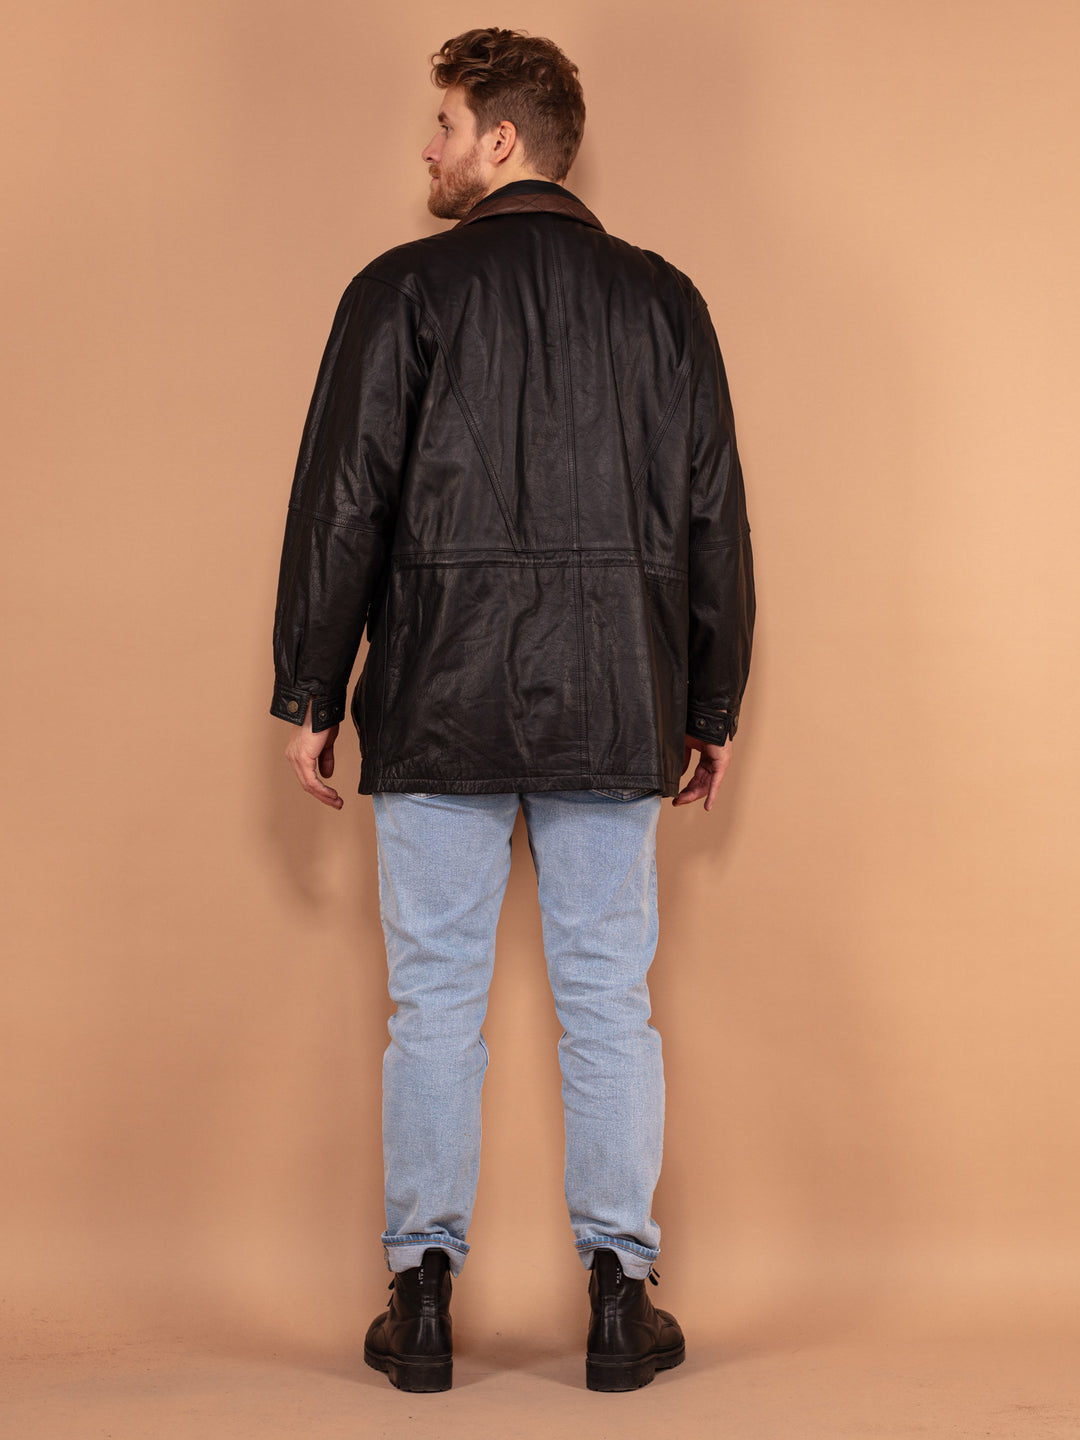 Black Leather Jacket 90s, Size Large L Vintage Leather Jacket, Black Moto Jacket, Minimalist Jacket, Sleek Leather Jacket, BetaMenswear